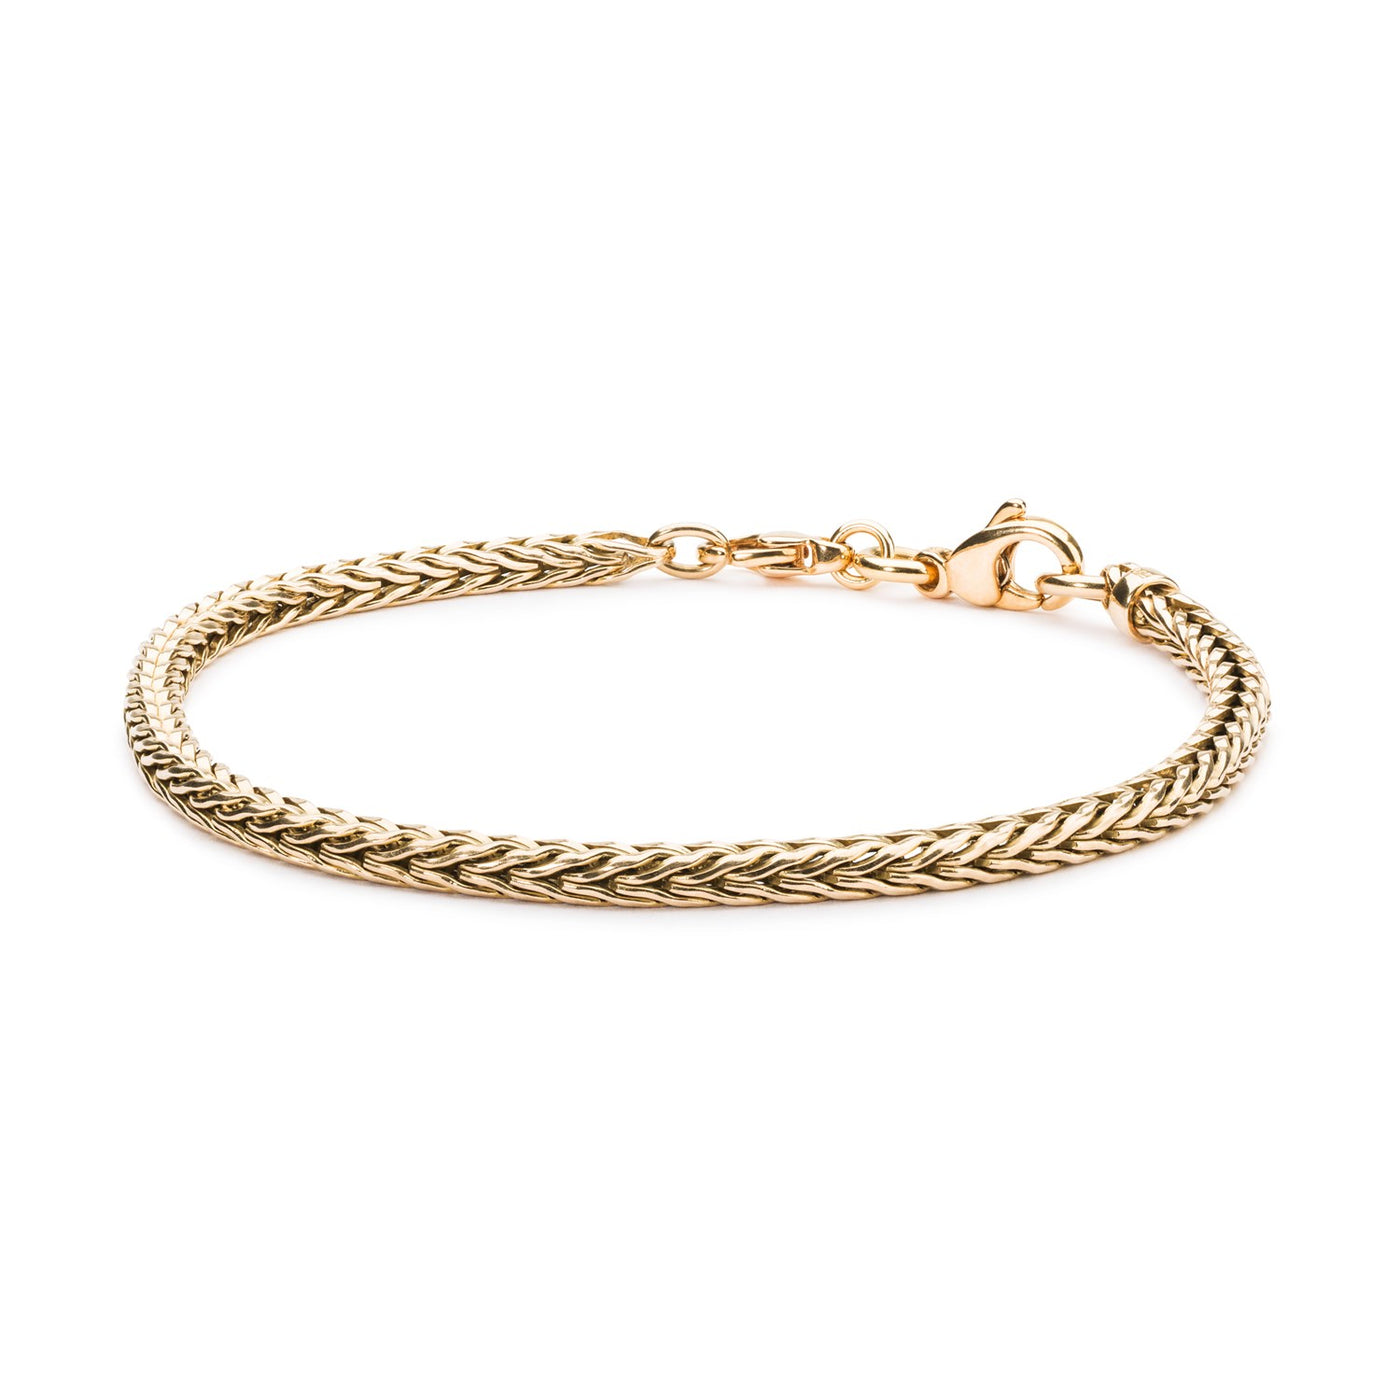 Gold 14 k Bracelet with Basic Lock